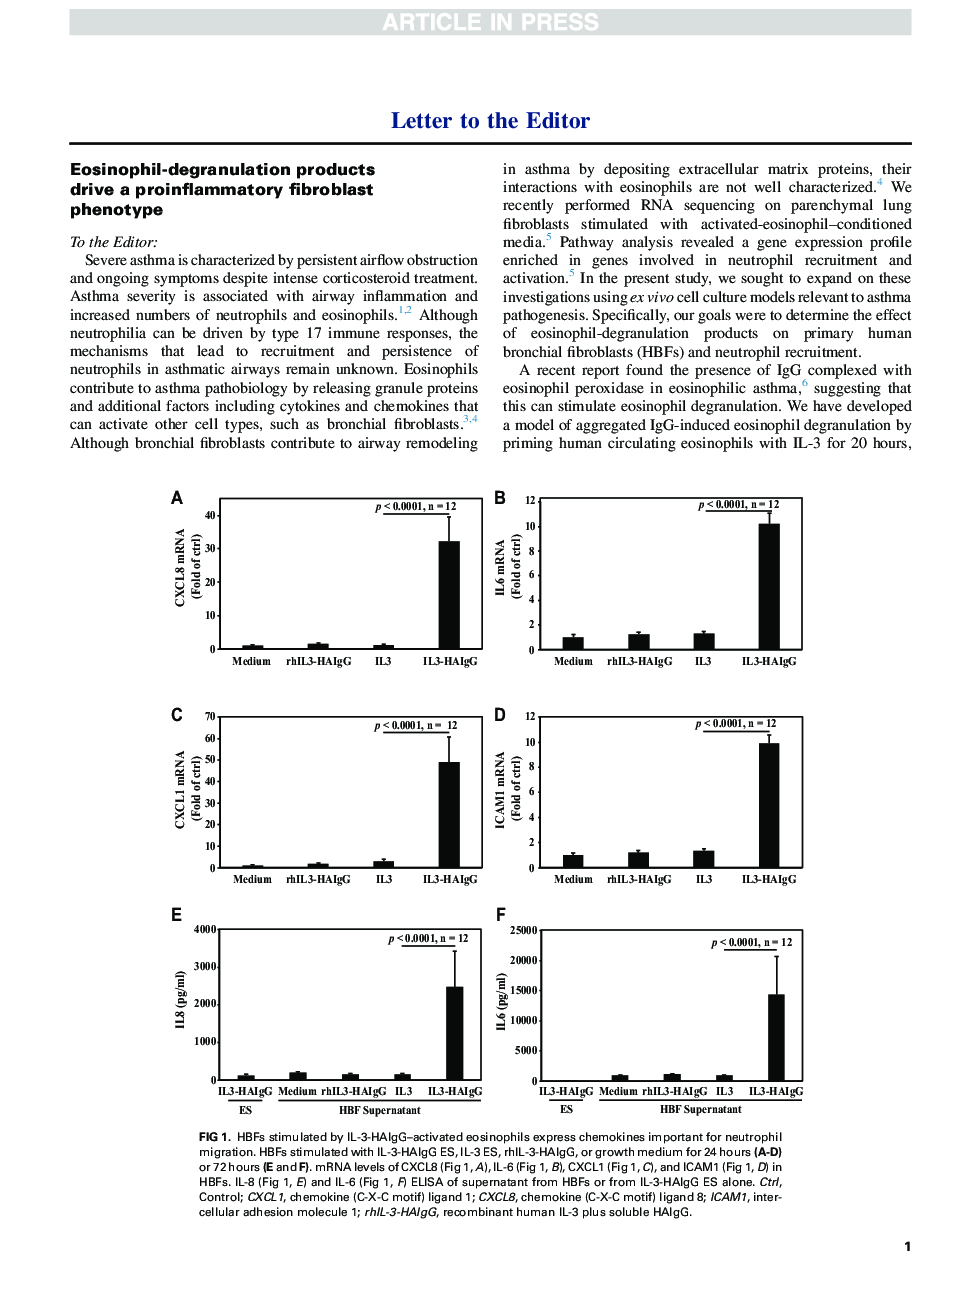 Eosinophil-degranulation products drive a proinflammatory fibroblast phenotype